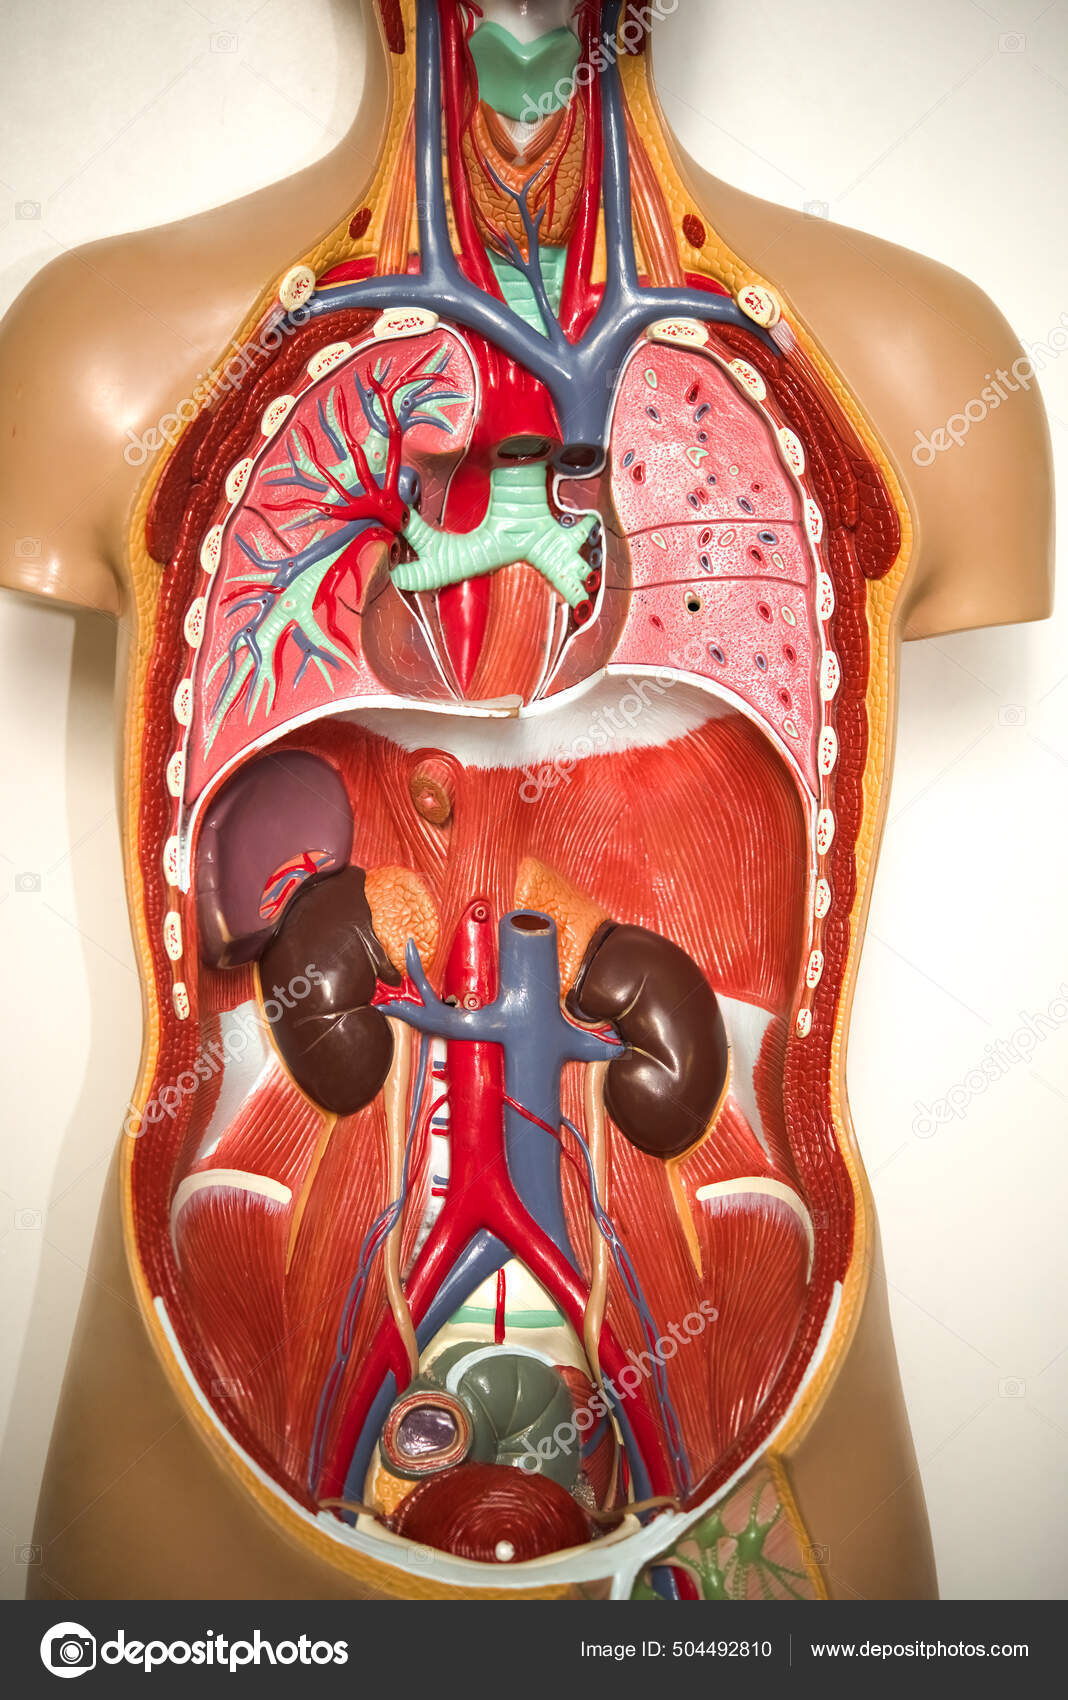 L'anatomie du corps humain  Anatomie du corps humain, Anatomie du